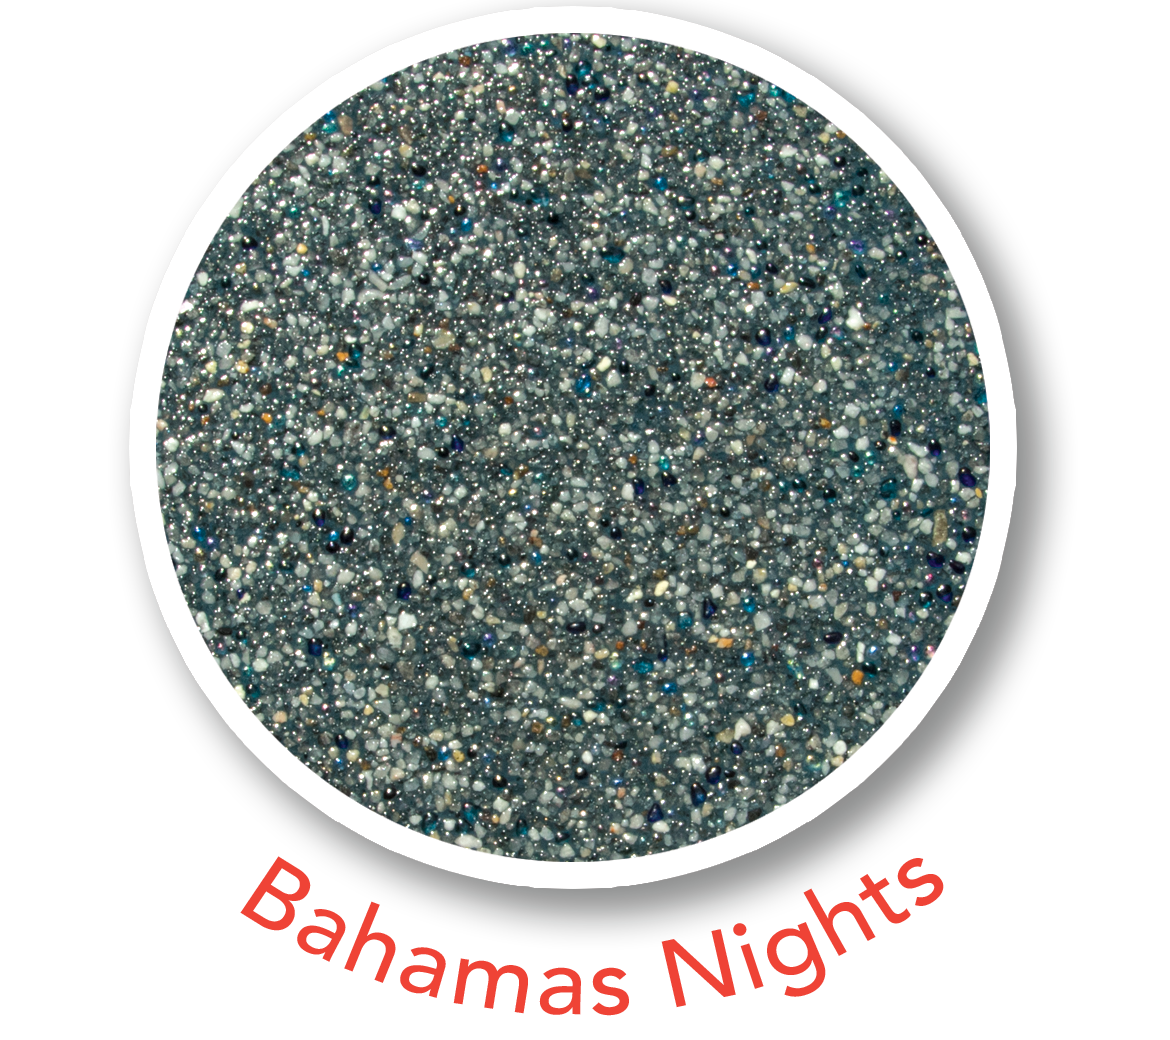 Bahamas Night